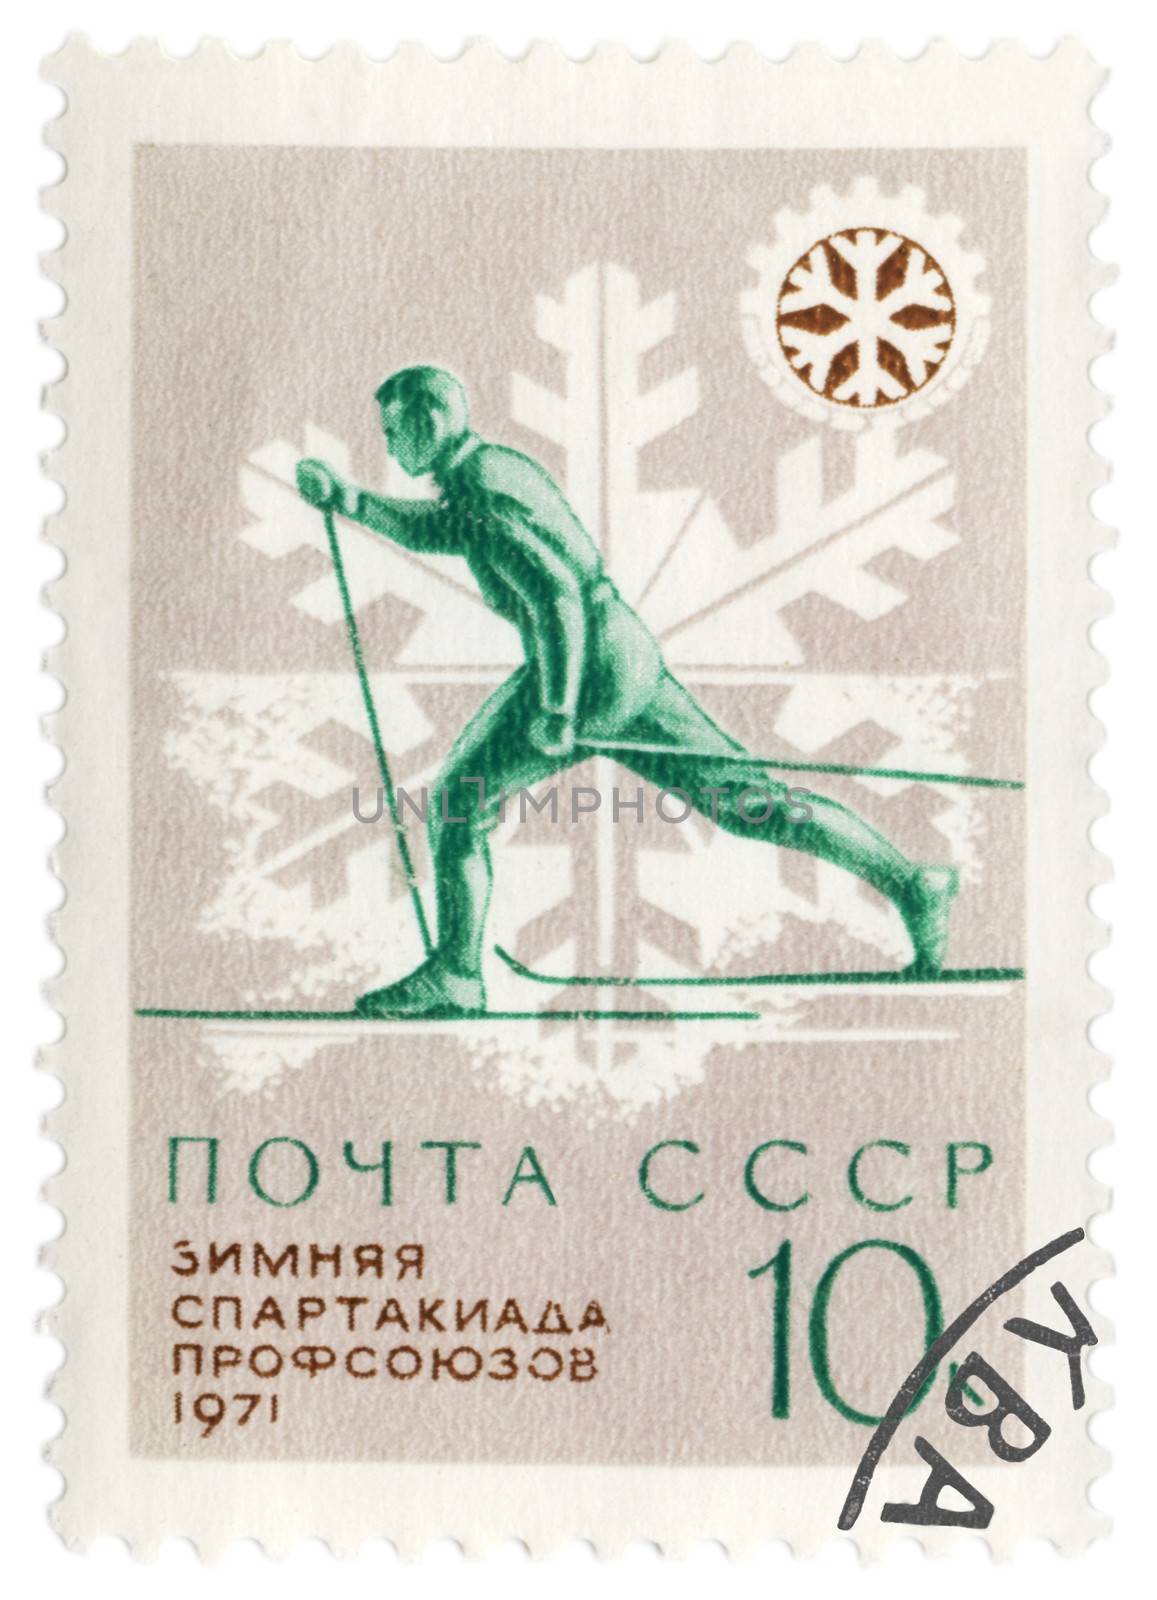 Running skier on post stamp by wander